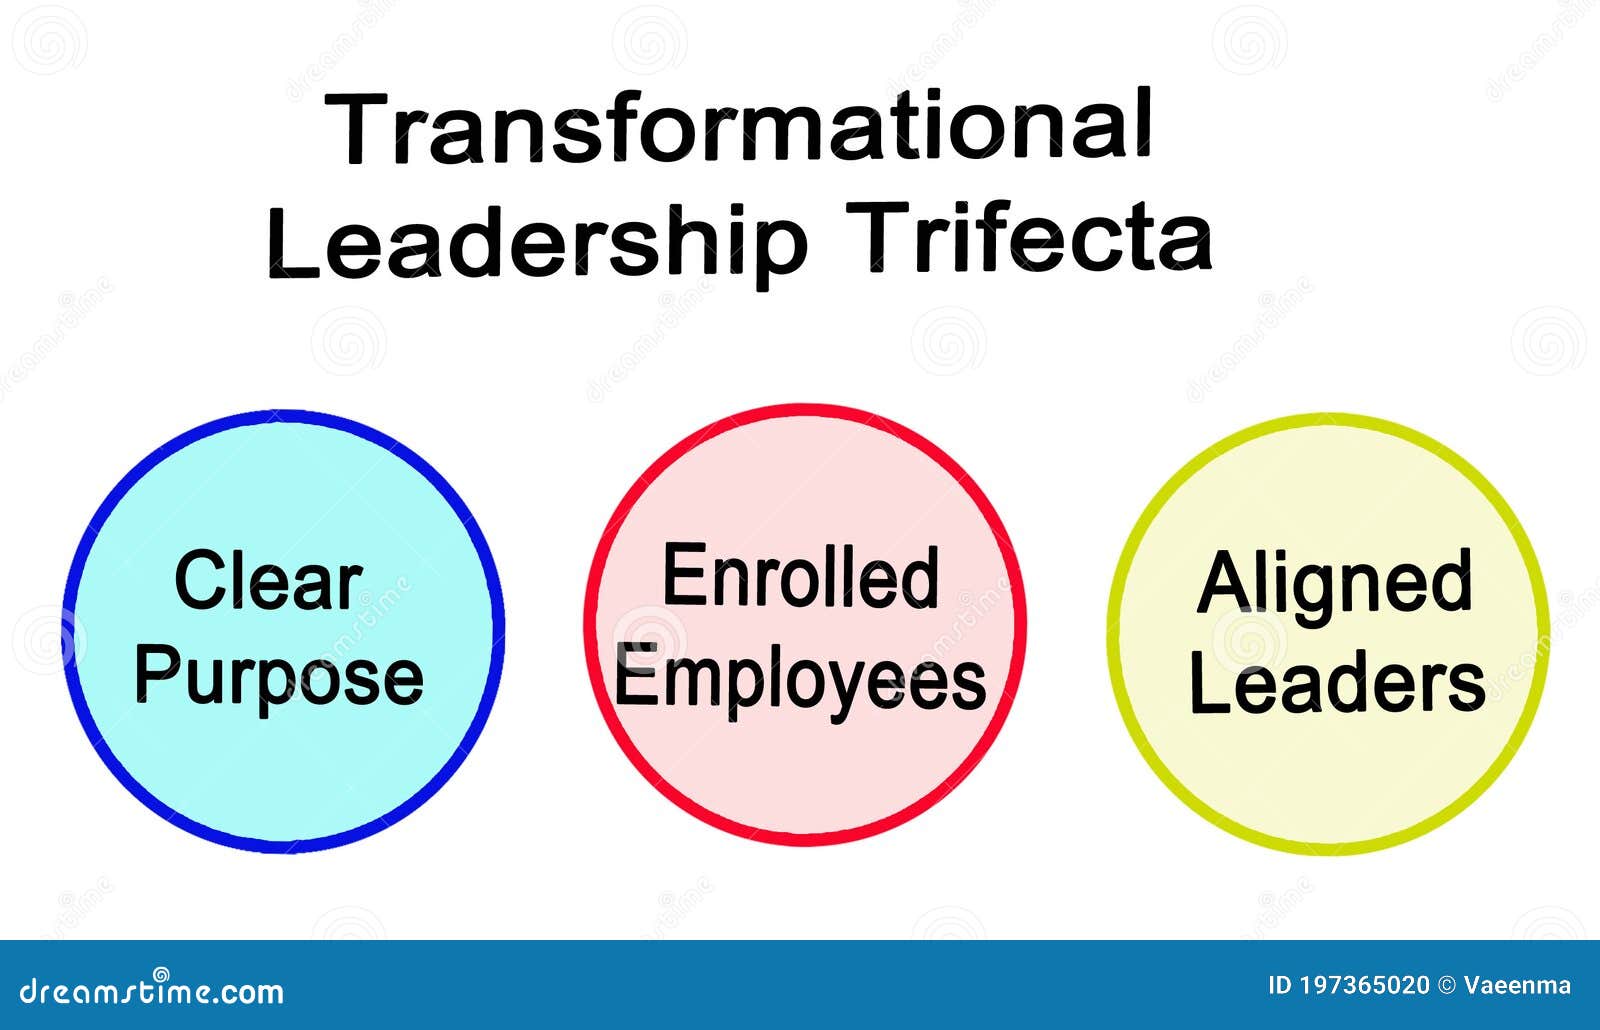 transformational leadership trifecta